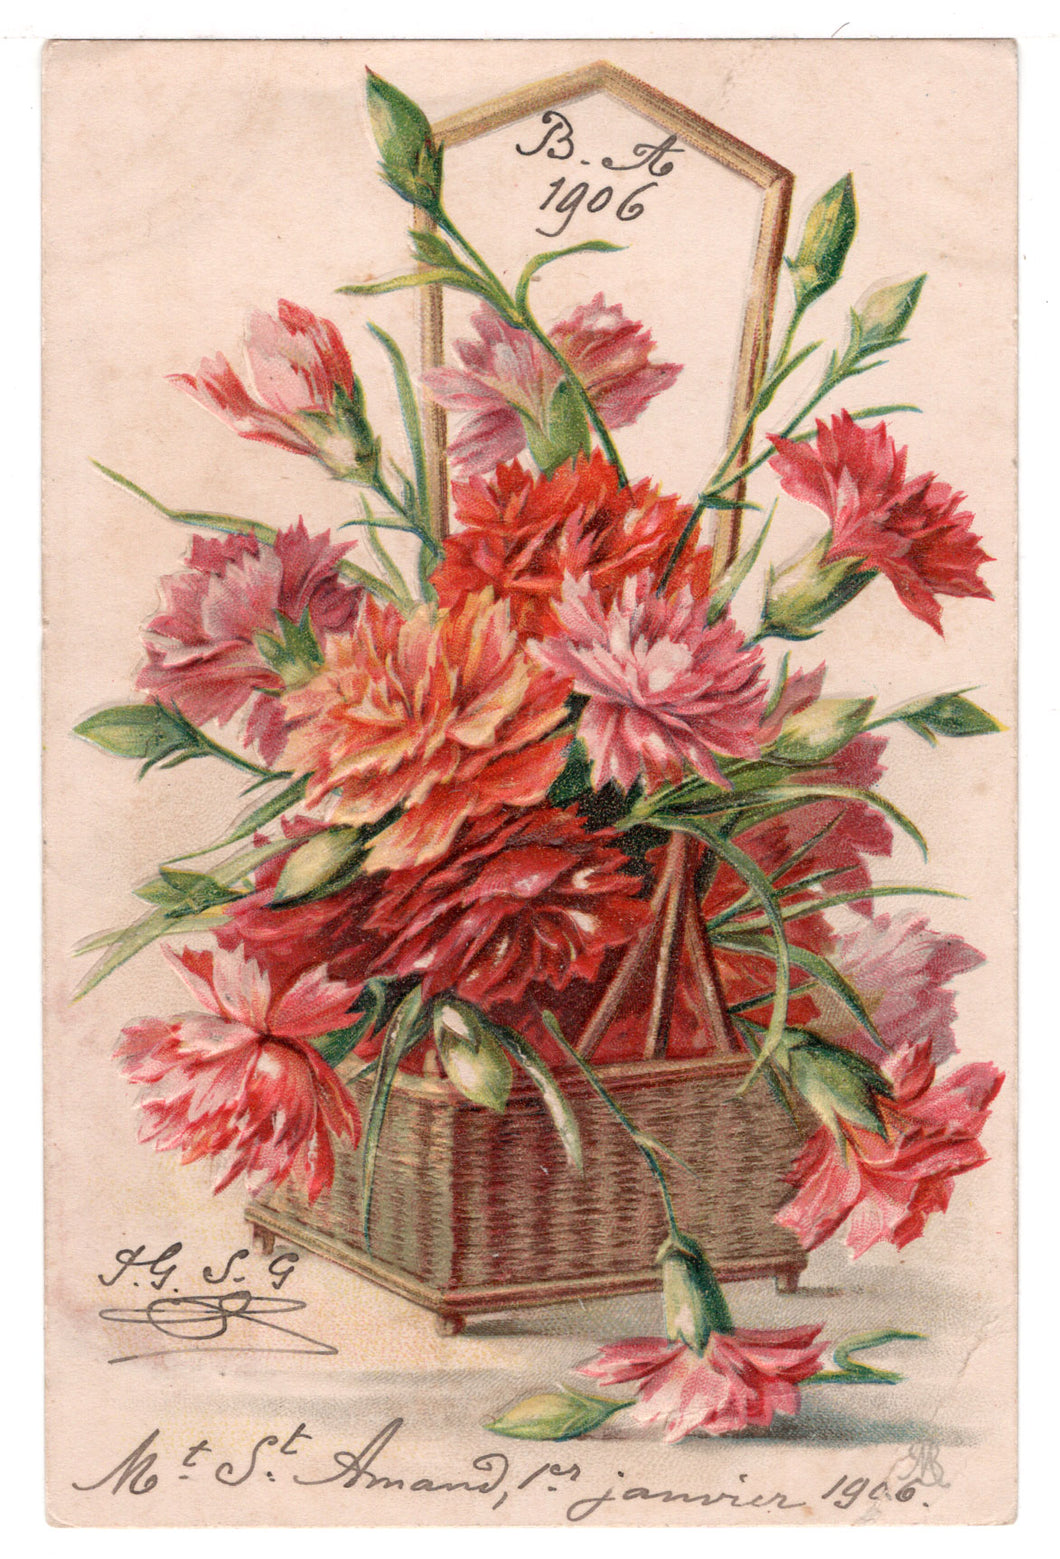 New Years Greetings Vintage Original Postcard # 0775 - January 1, 1906